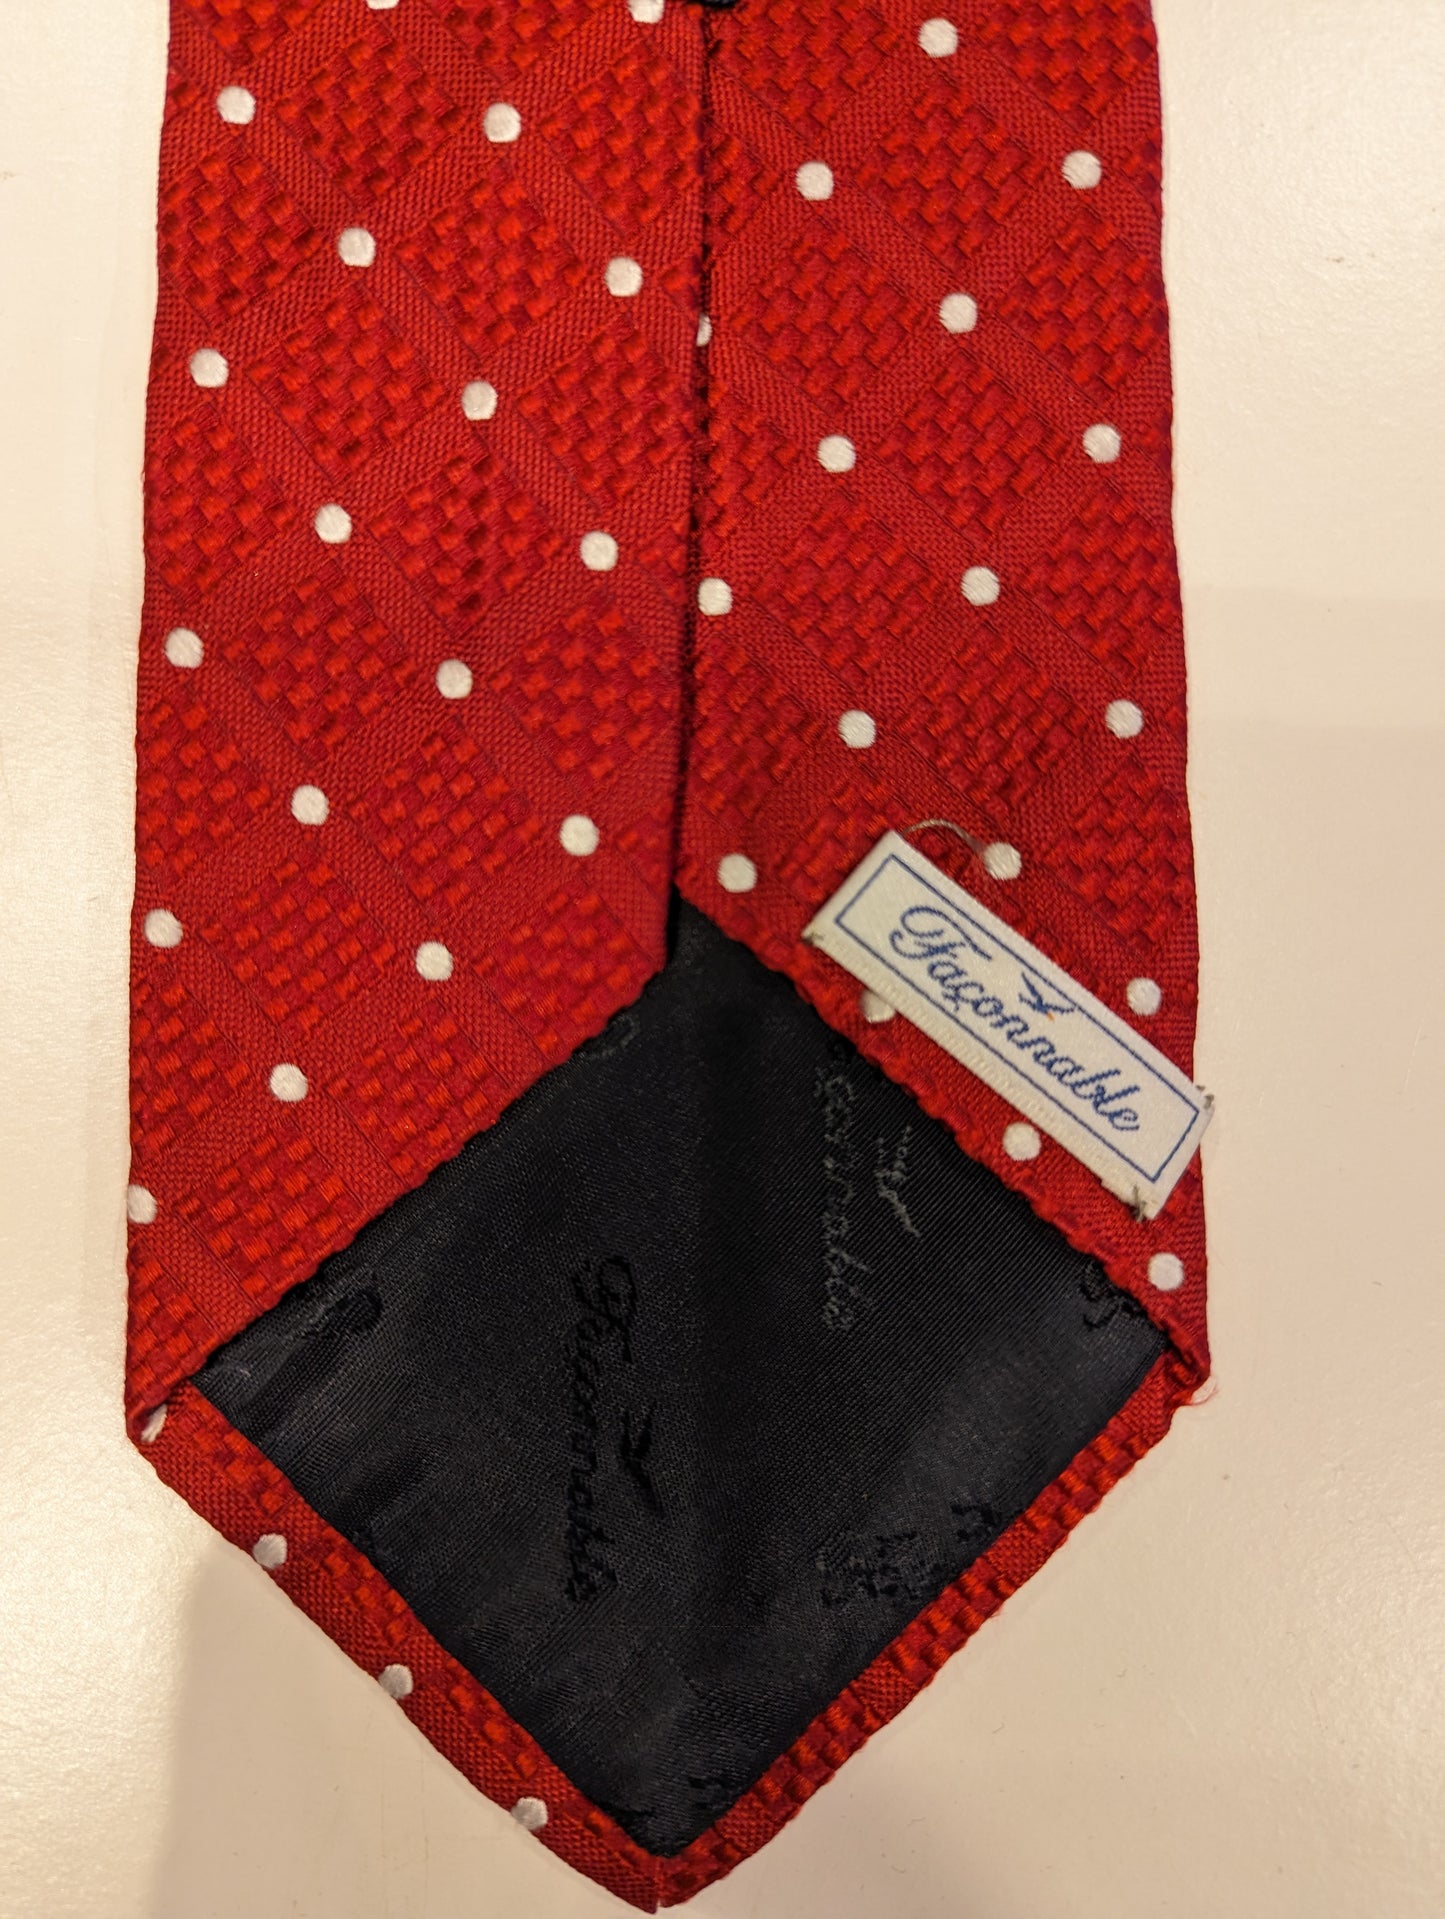 Faconable vintage zijde stropdas. Rood wit motief.